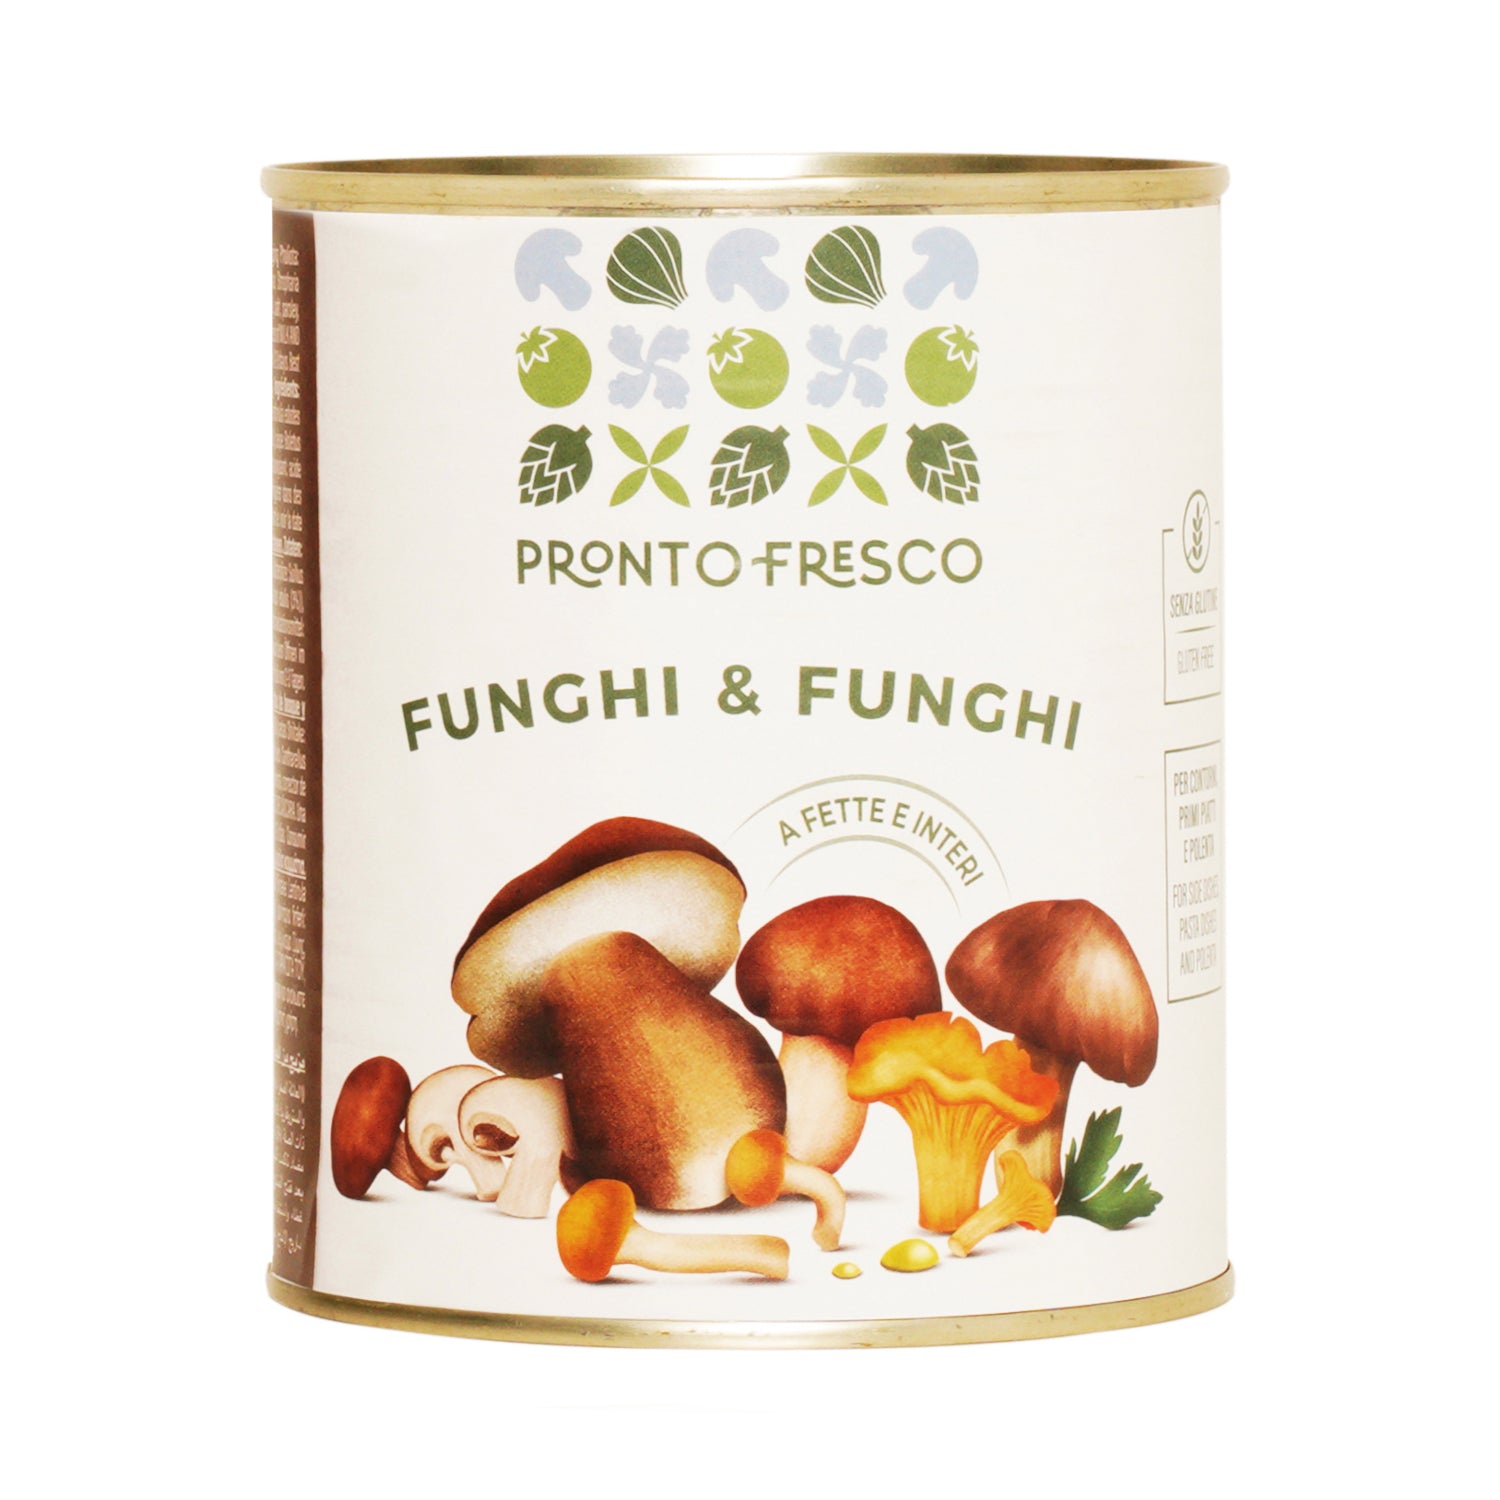 Greci Pronto Fresco - Funghi & Funghi Cultivated Mushrooms - 800g